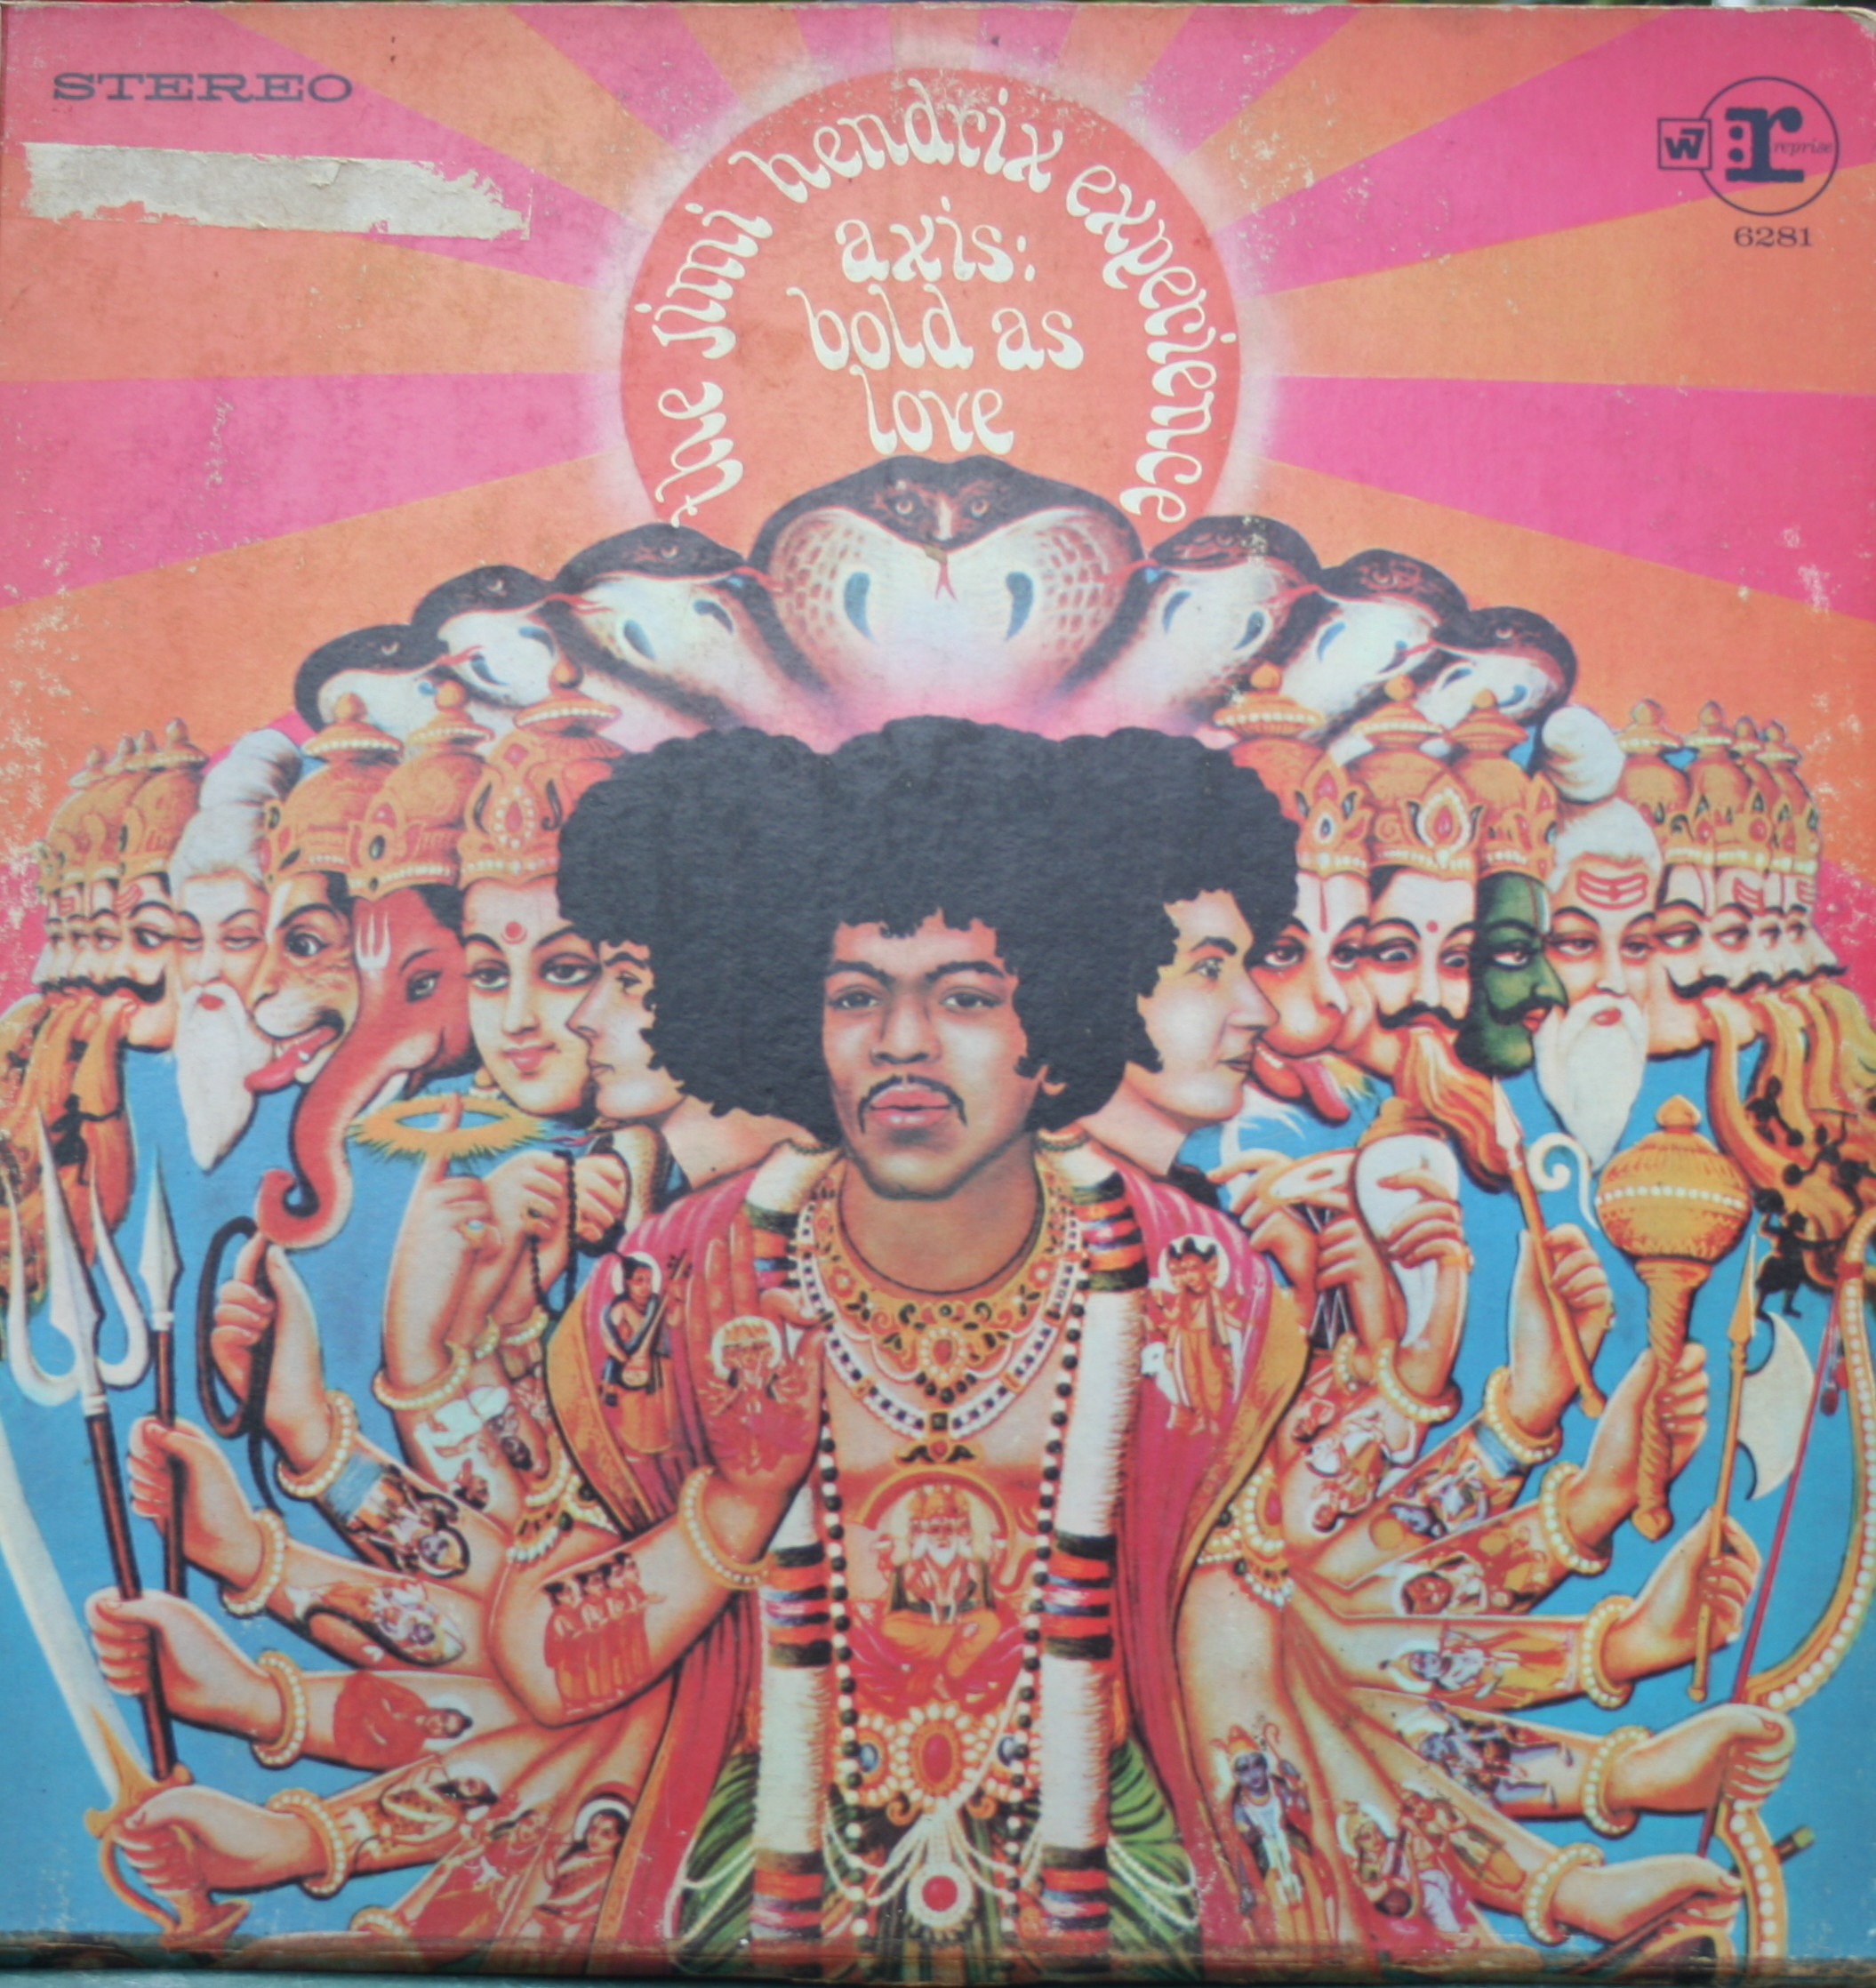 Jimi Hendrix Album Covers - Jimi Hendrix Photo (2304180) - Fanpop